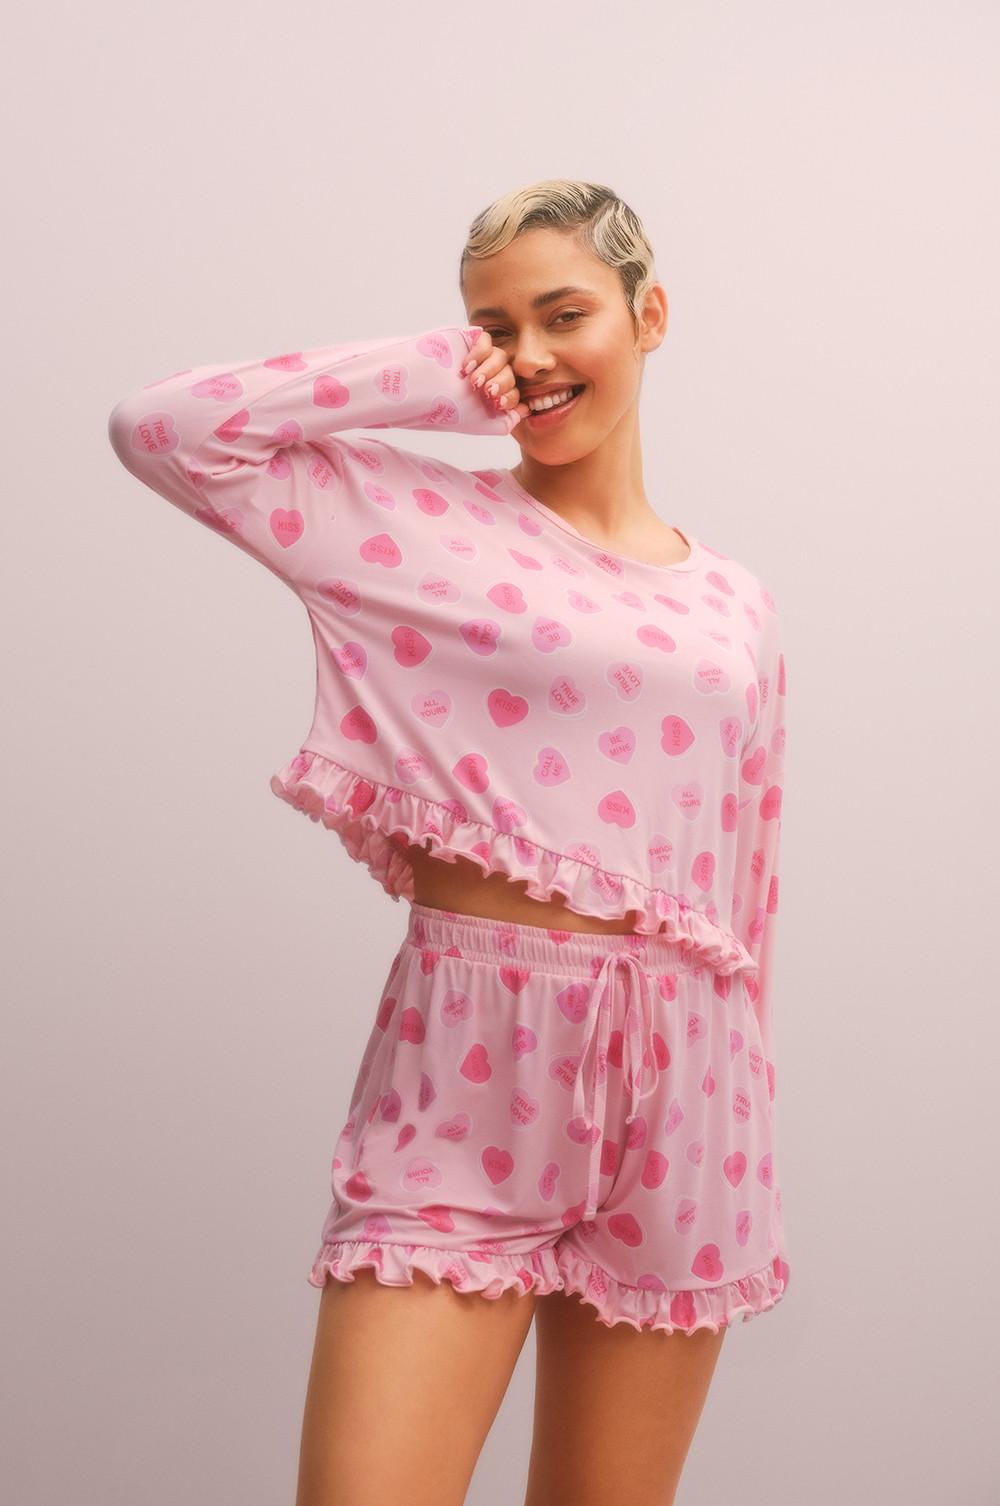 Heart Pajamas - Shop on Pinterest